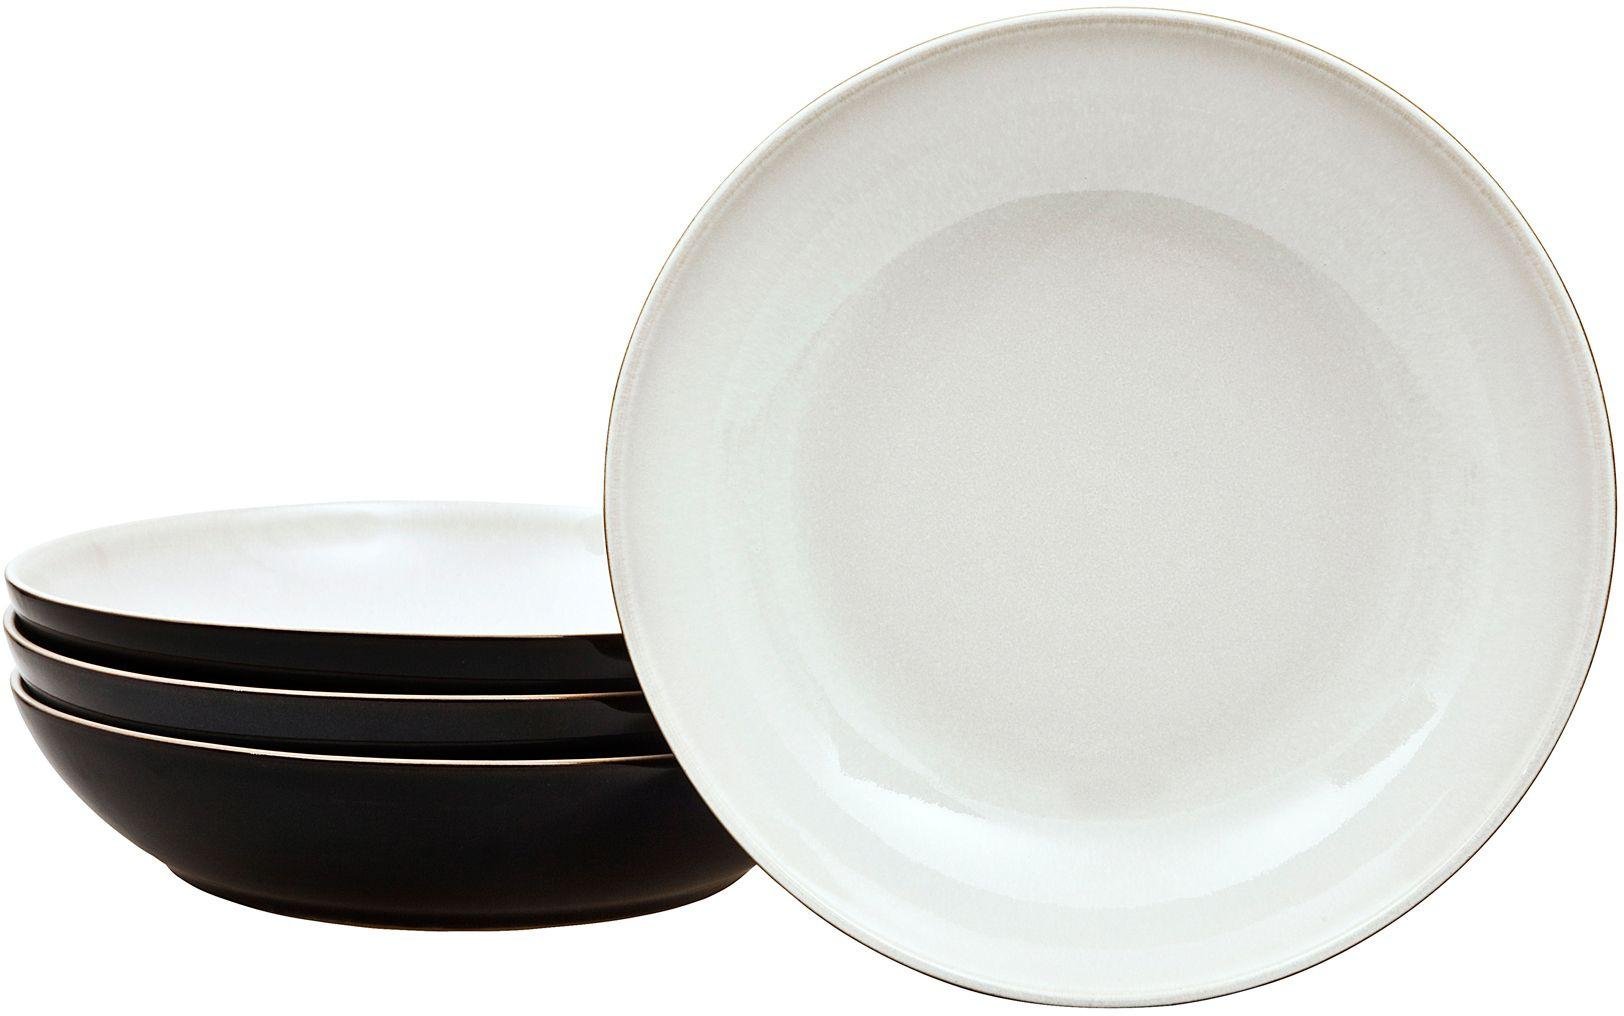 Denby Everyday Set of 4 Stoneware Pasta Bowls - Black Pepper